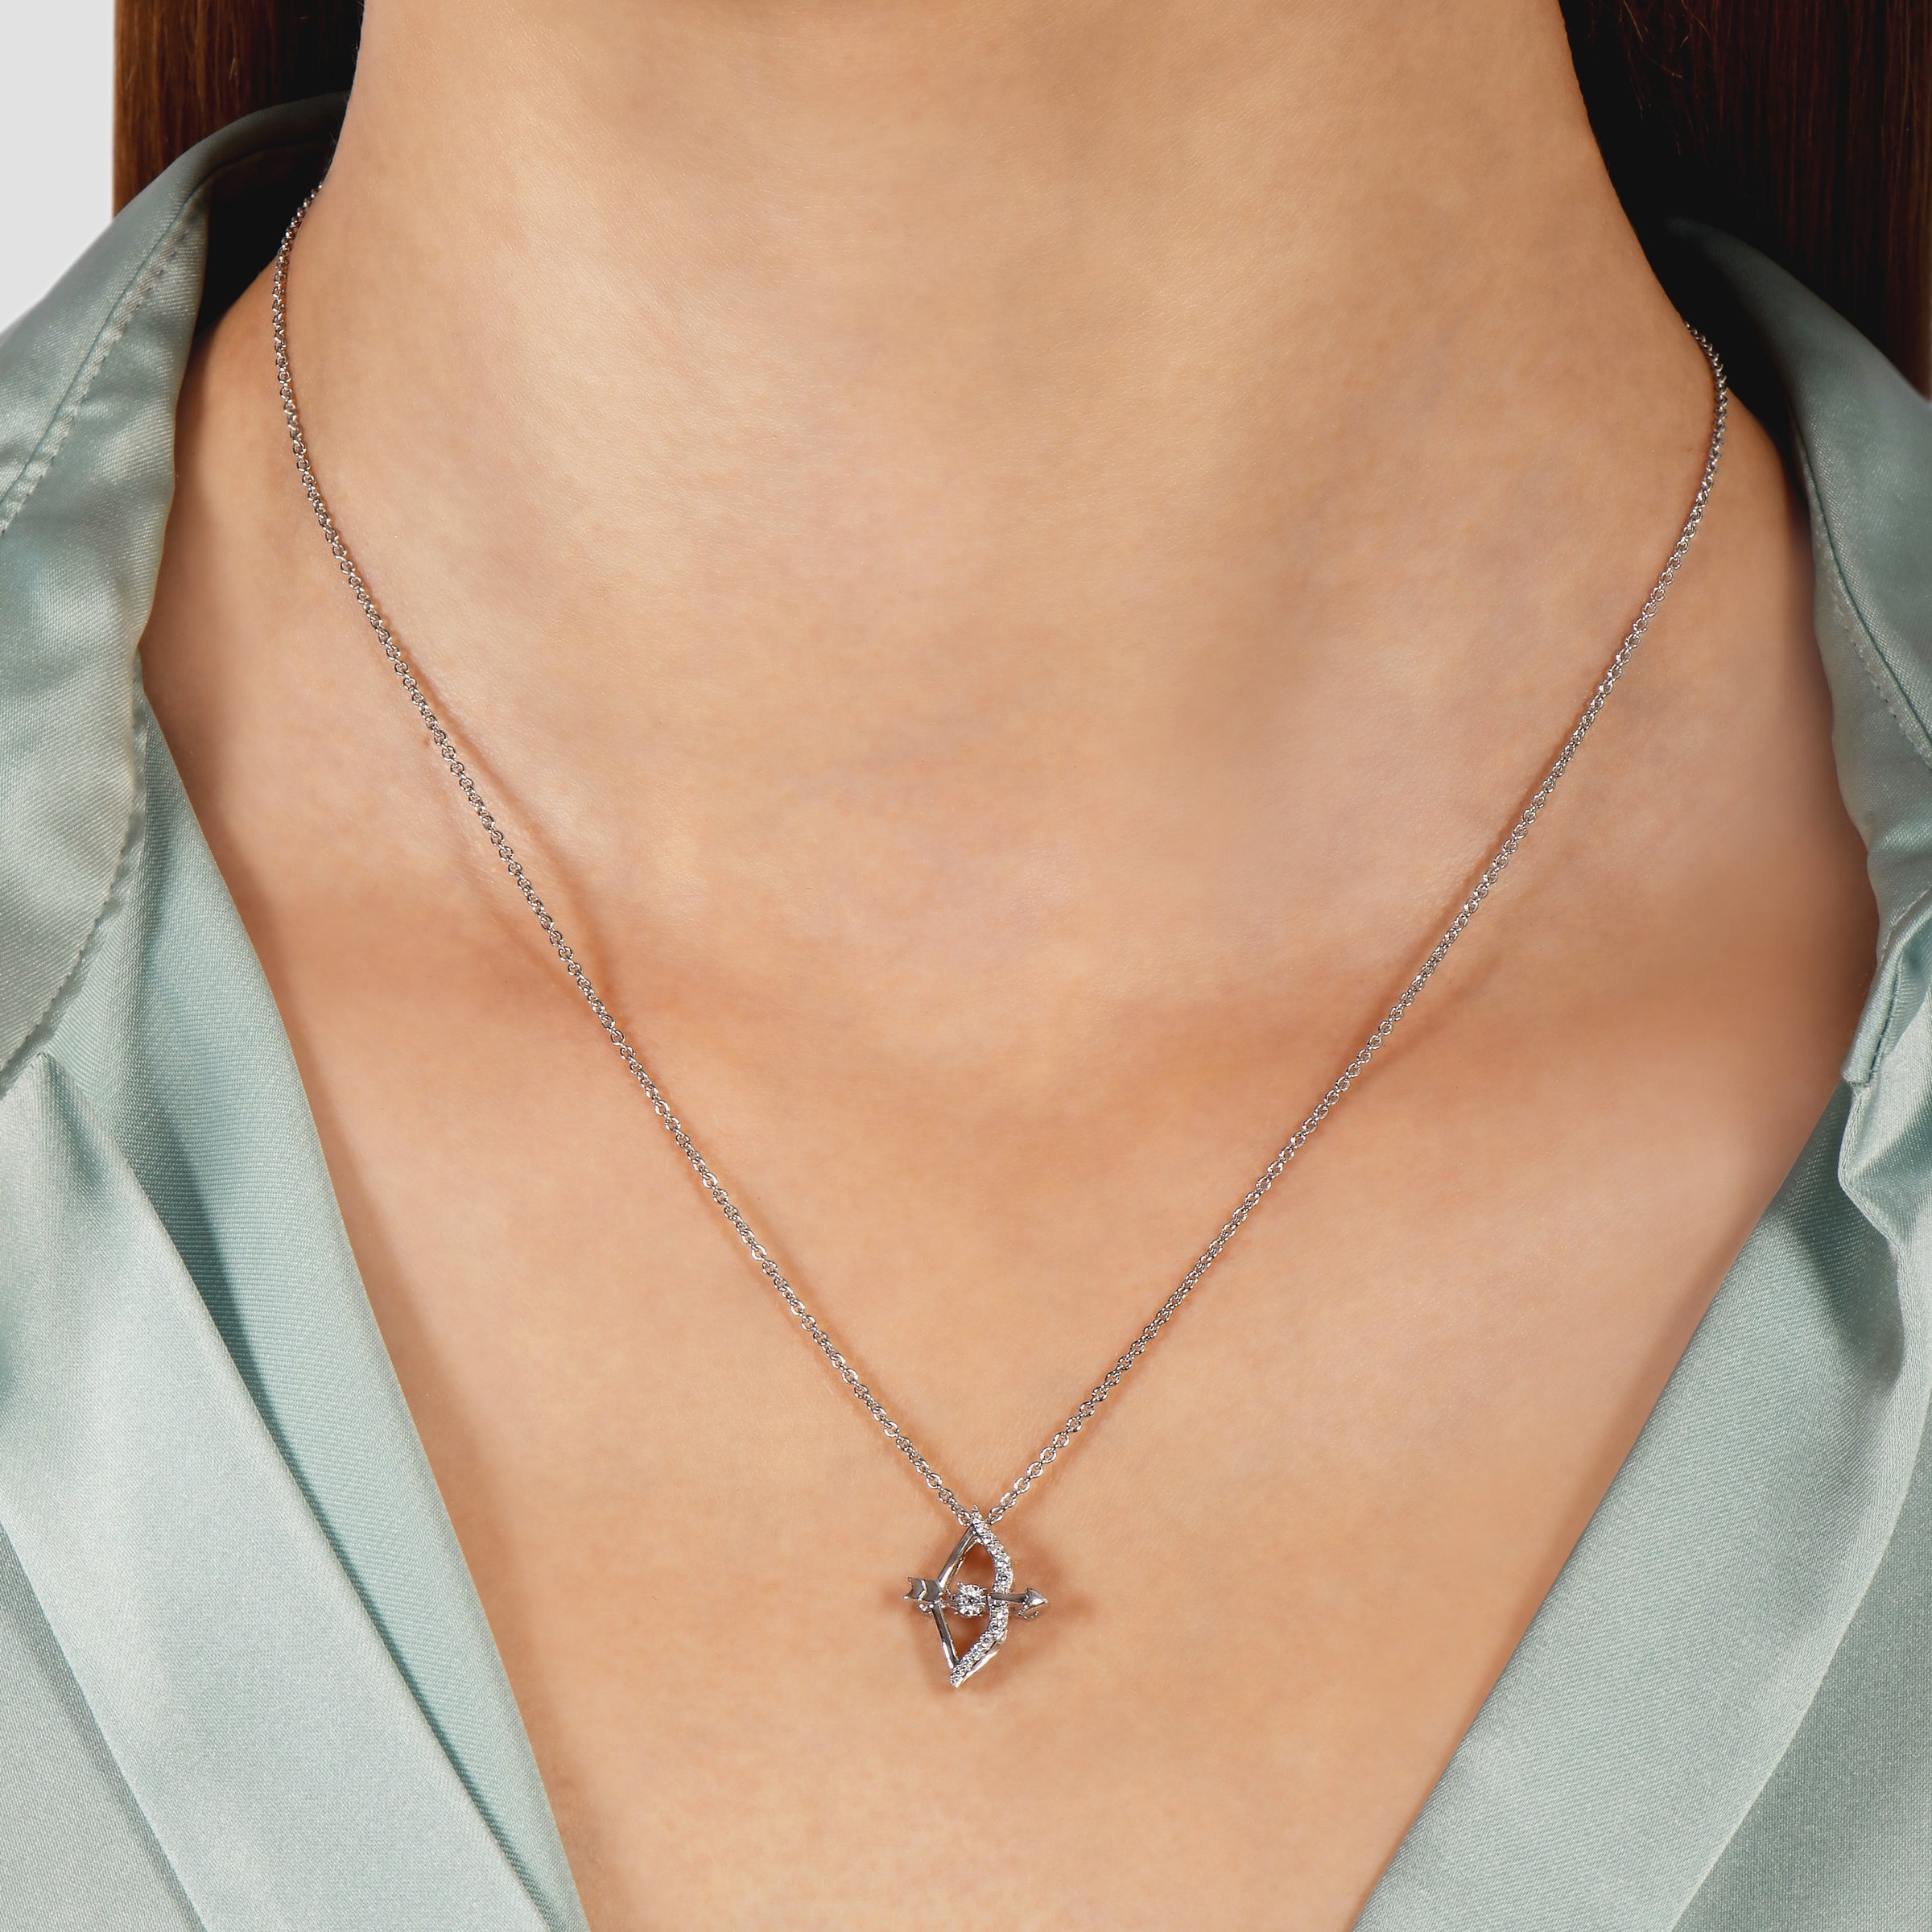 Brave Princess Merida Pixar Movie Poster Disney Necklace Pendant Jewelry  Silver | eBay